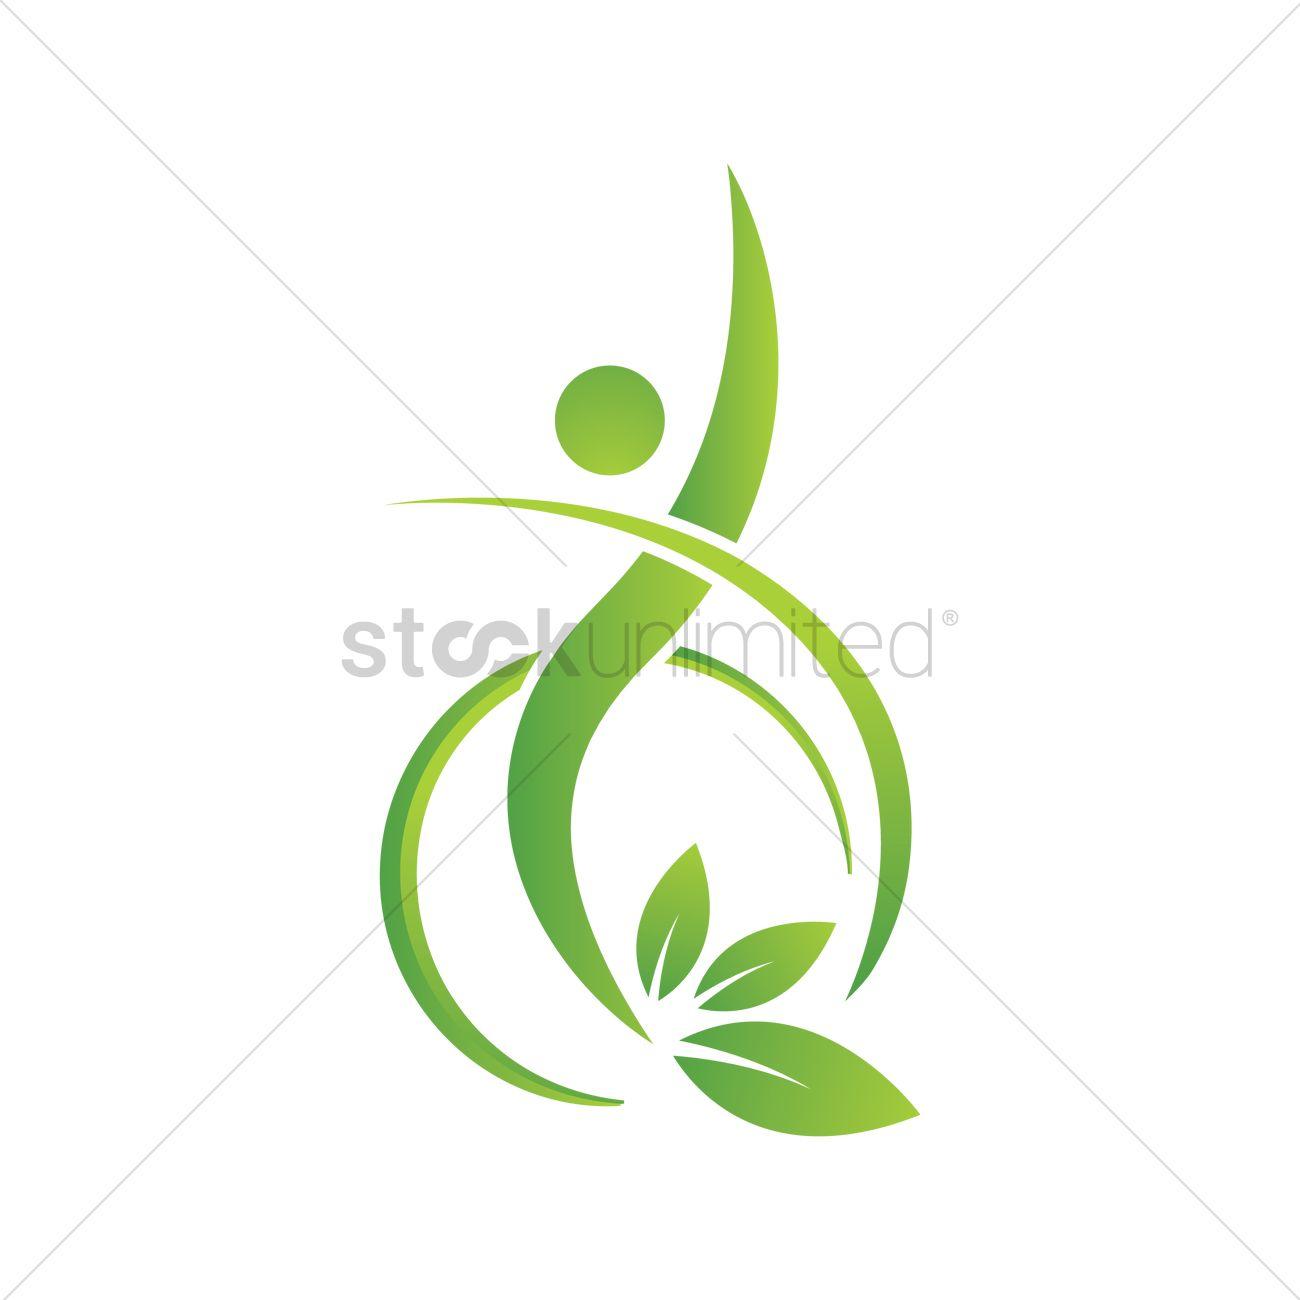 Environmental Logo - Environmental logo element Vector Image - 1939226 | StockUnlimited